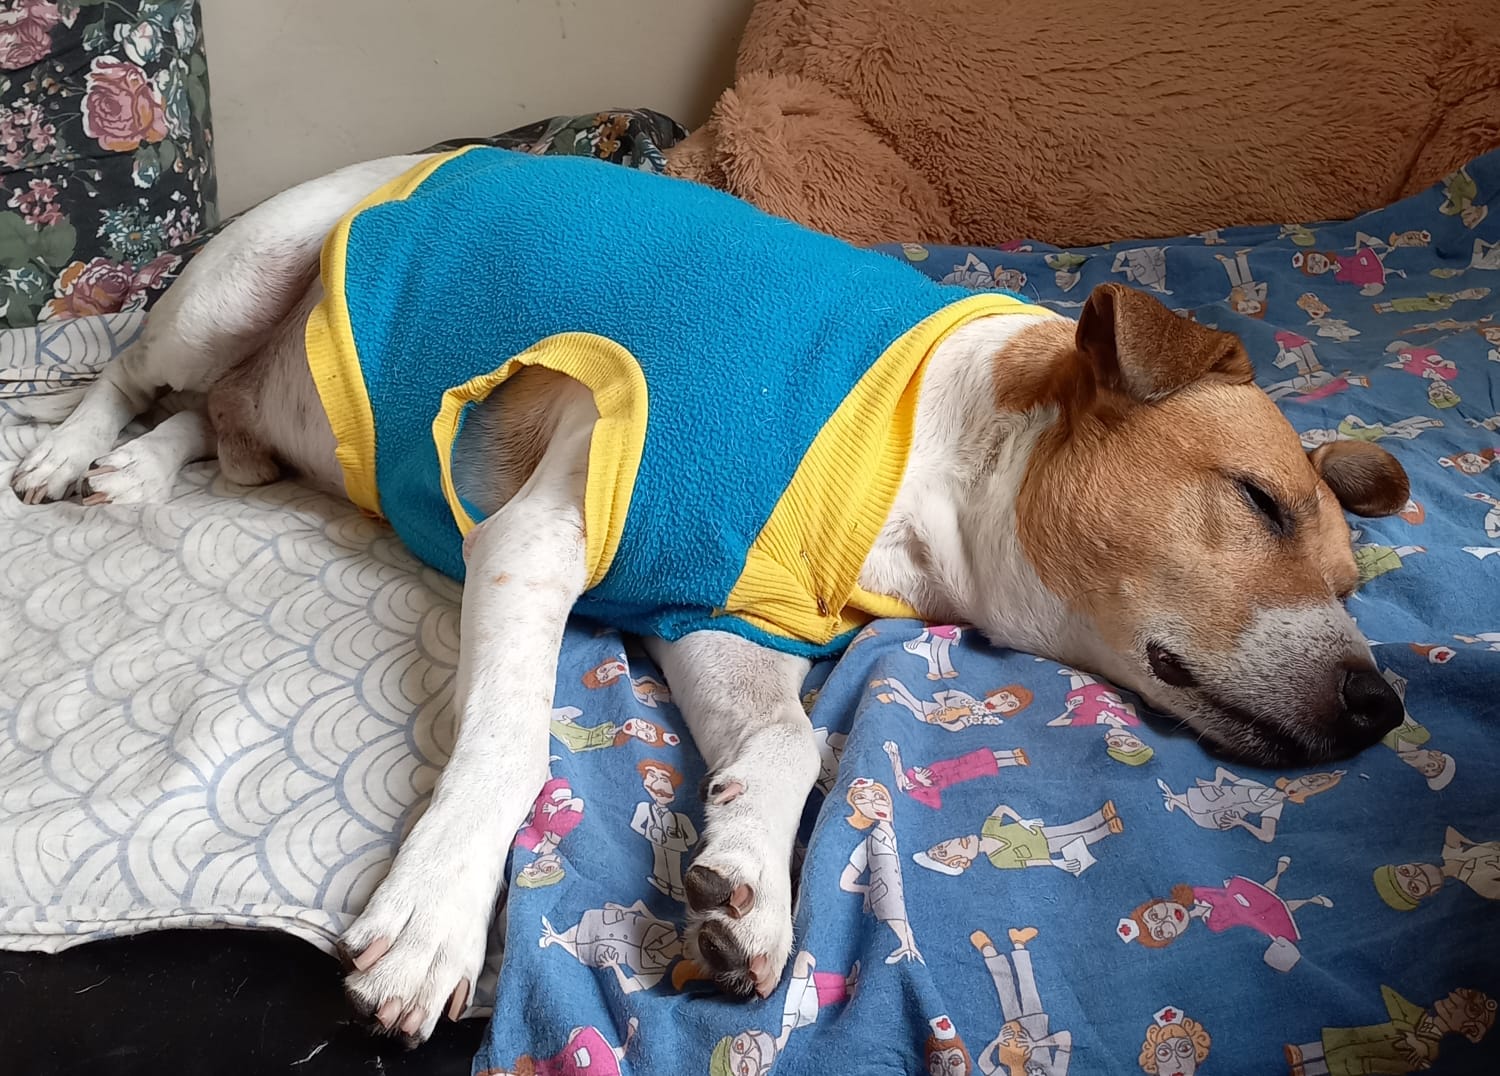 The Boney sleeping wearing his blue vest.